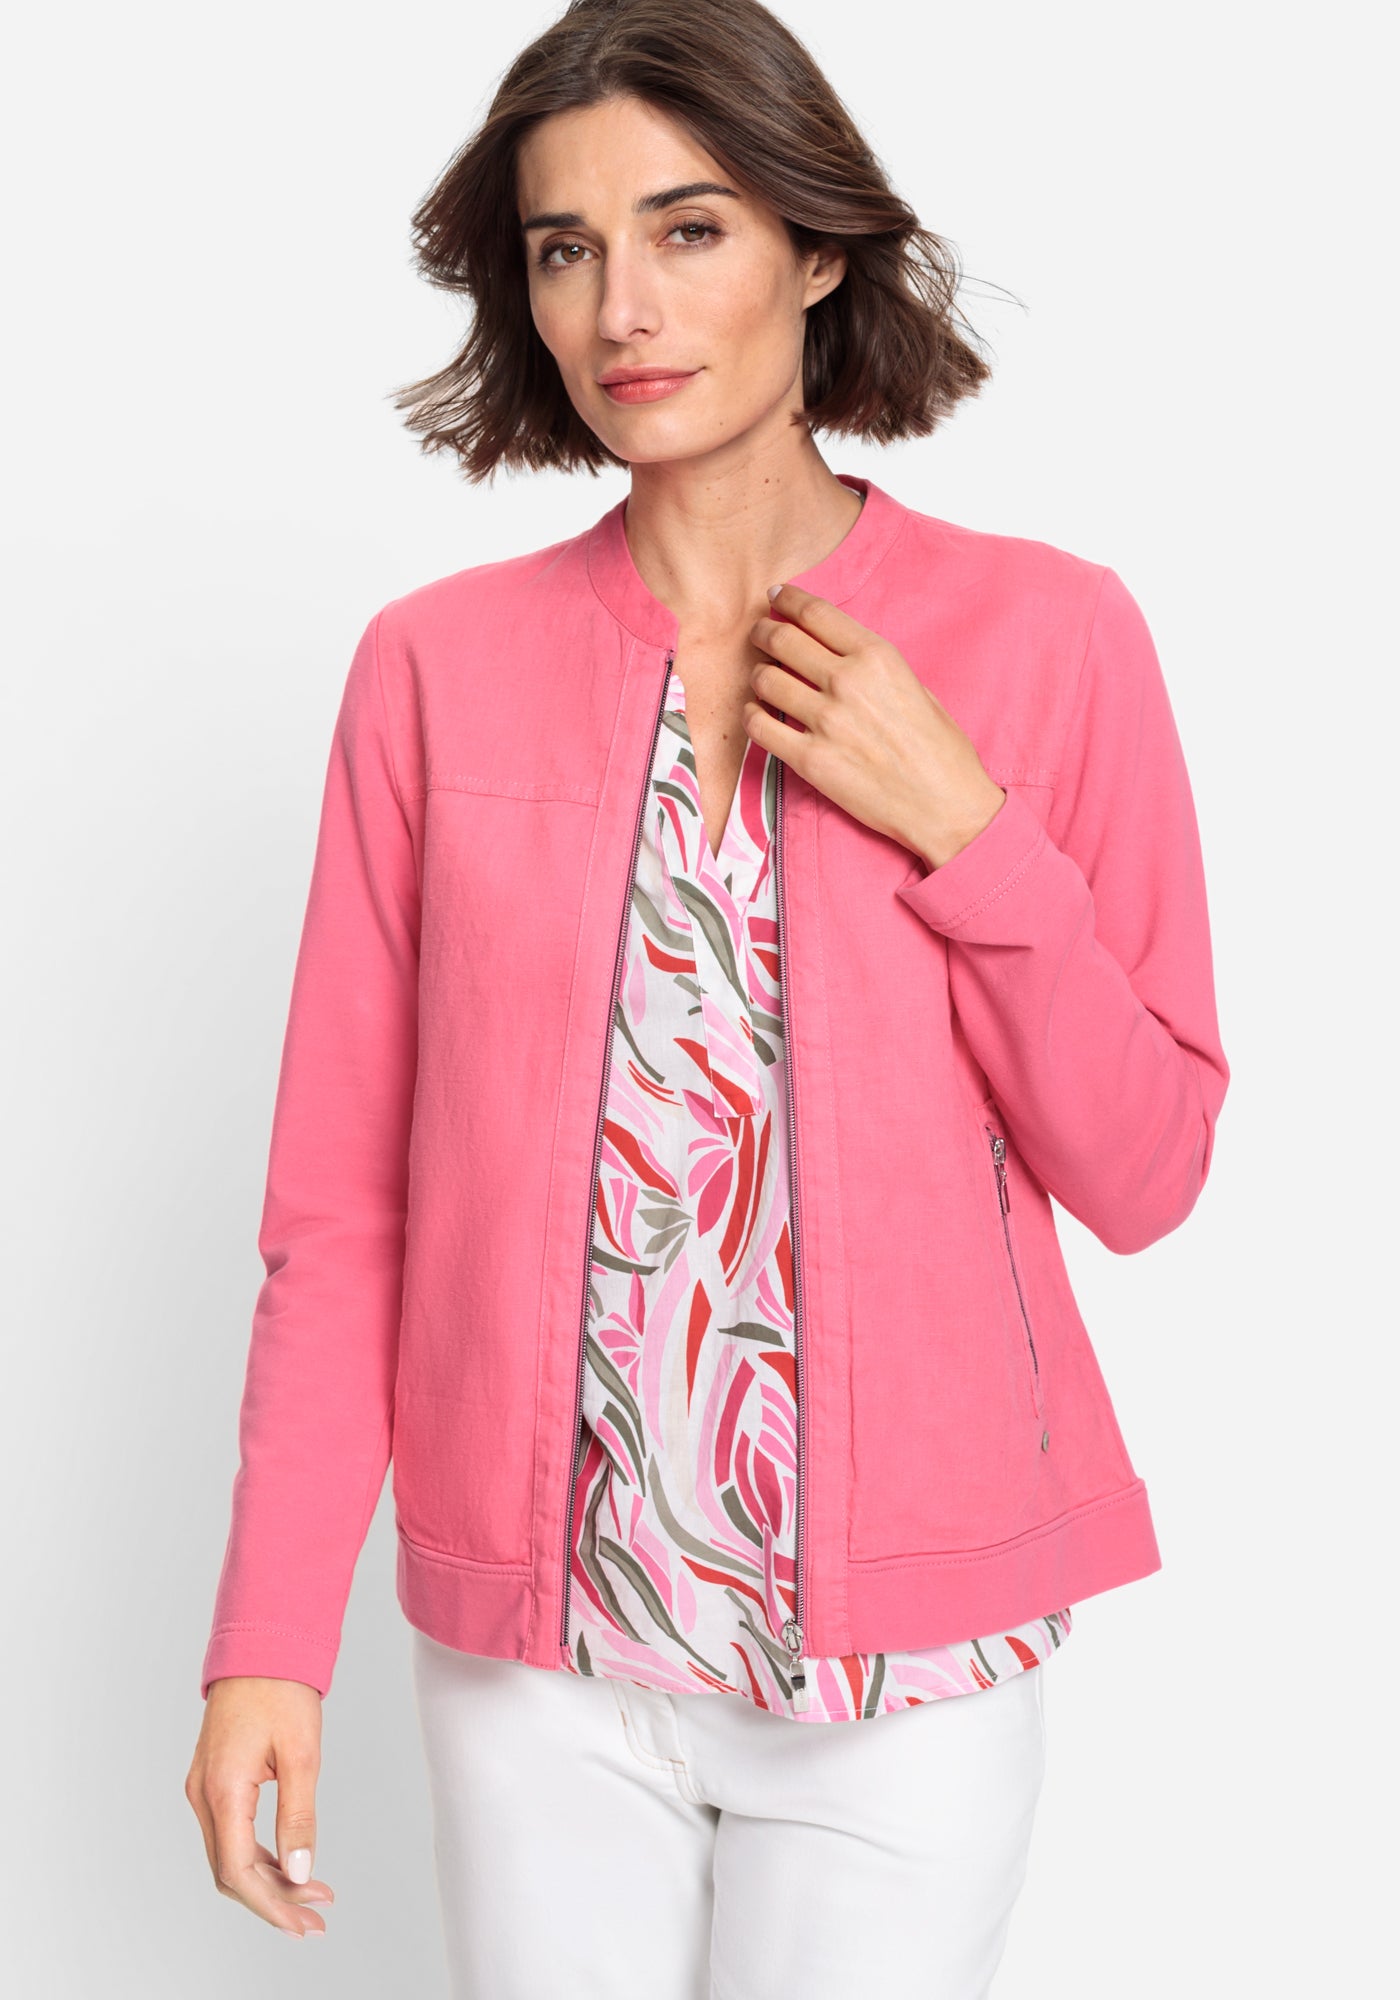 Eva Jersey Jacket in Paradise Pink